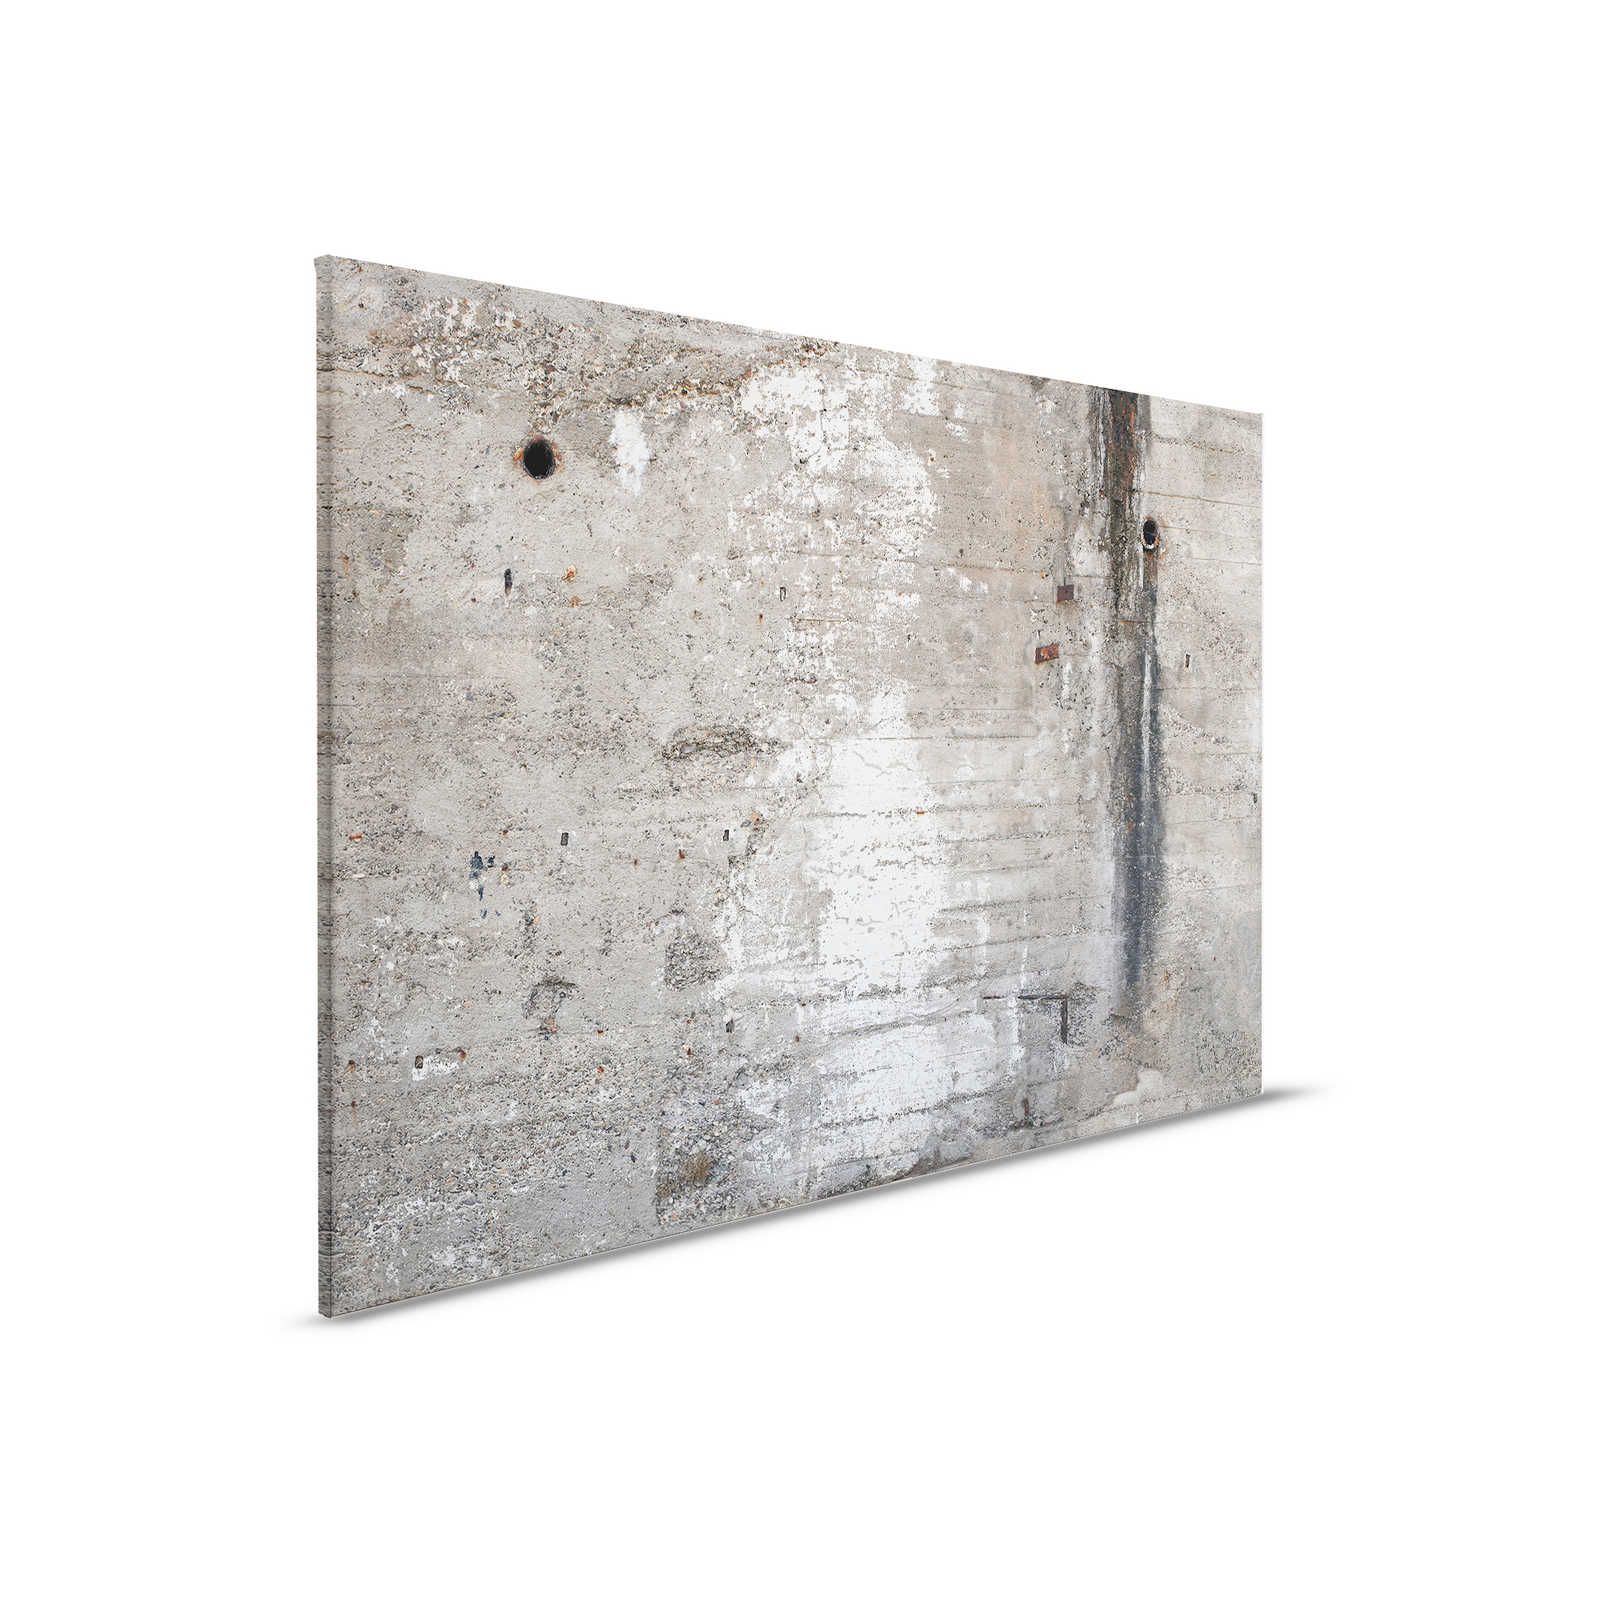         Betonwand Leinwandbild Industrial Stil rustikal – 0,90 m x 0,60 m
    